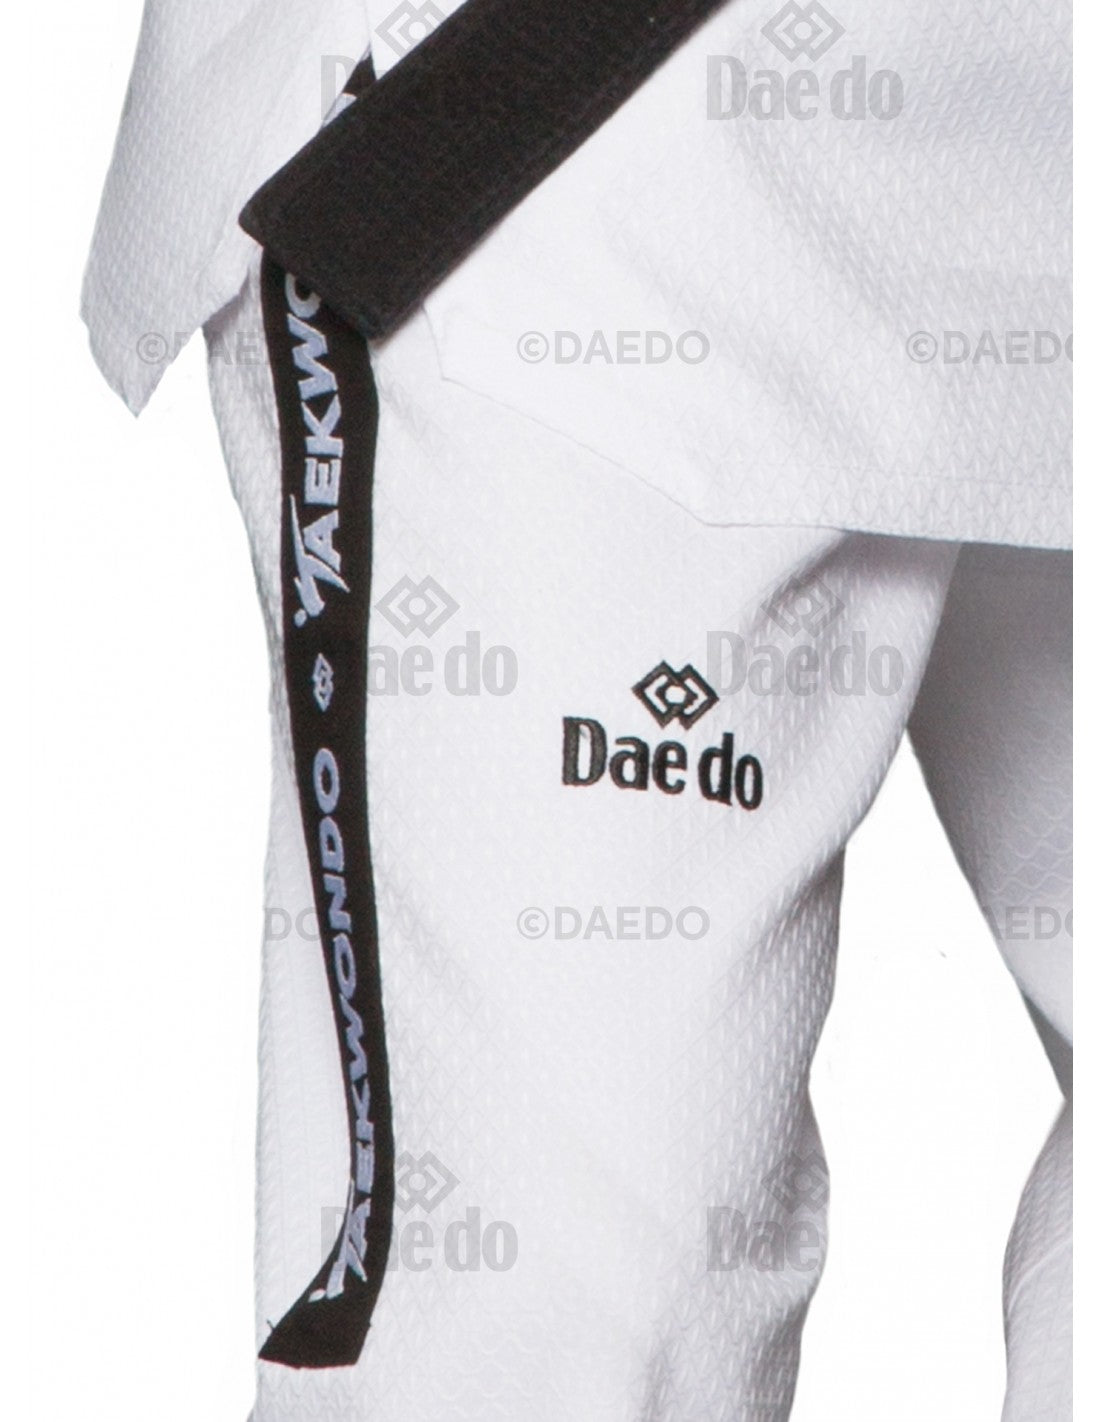 Compétition Daedo taekwondo dobok WT, TA2005